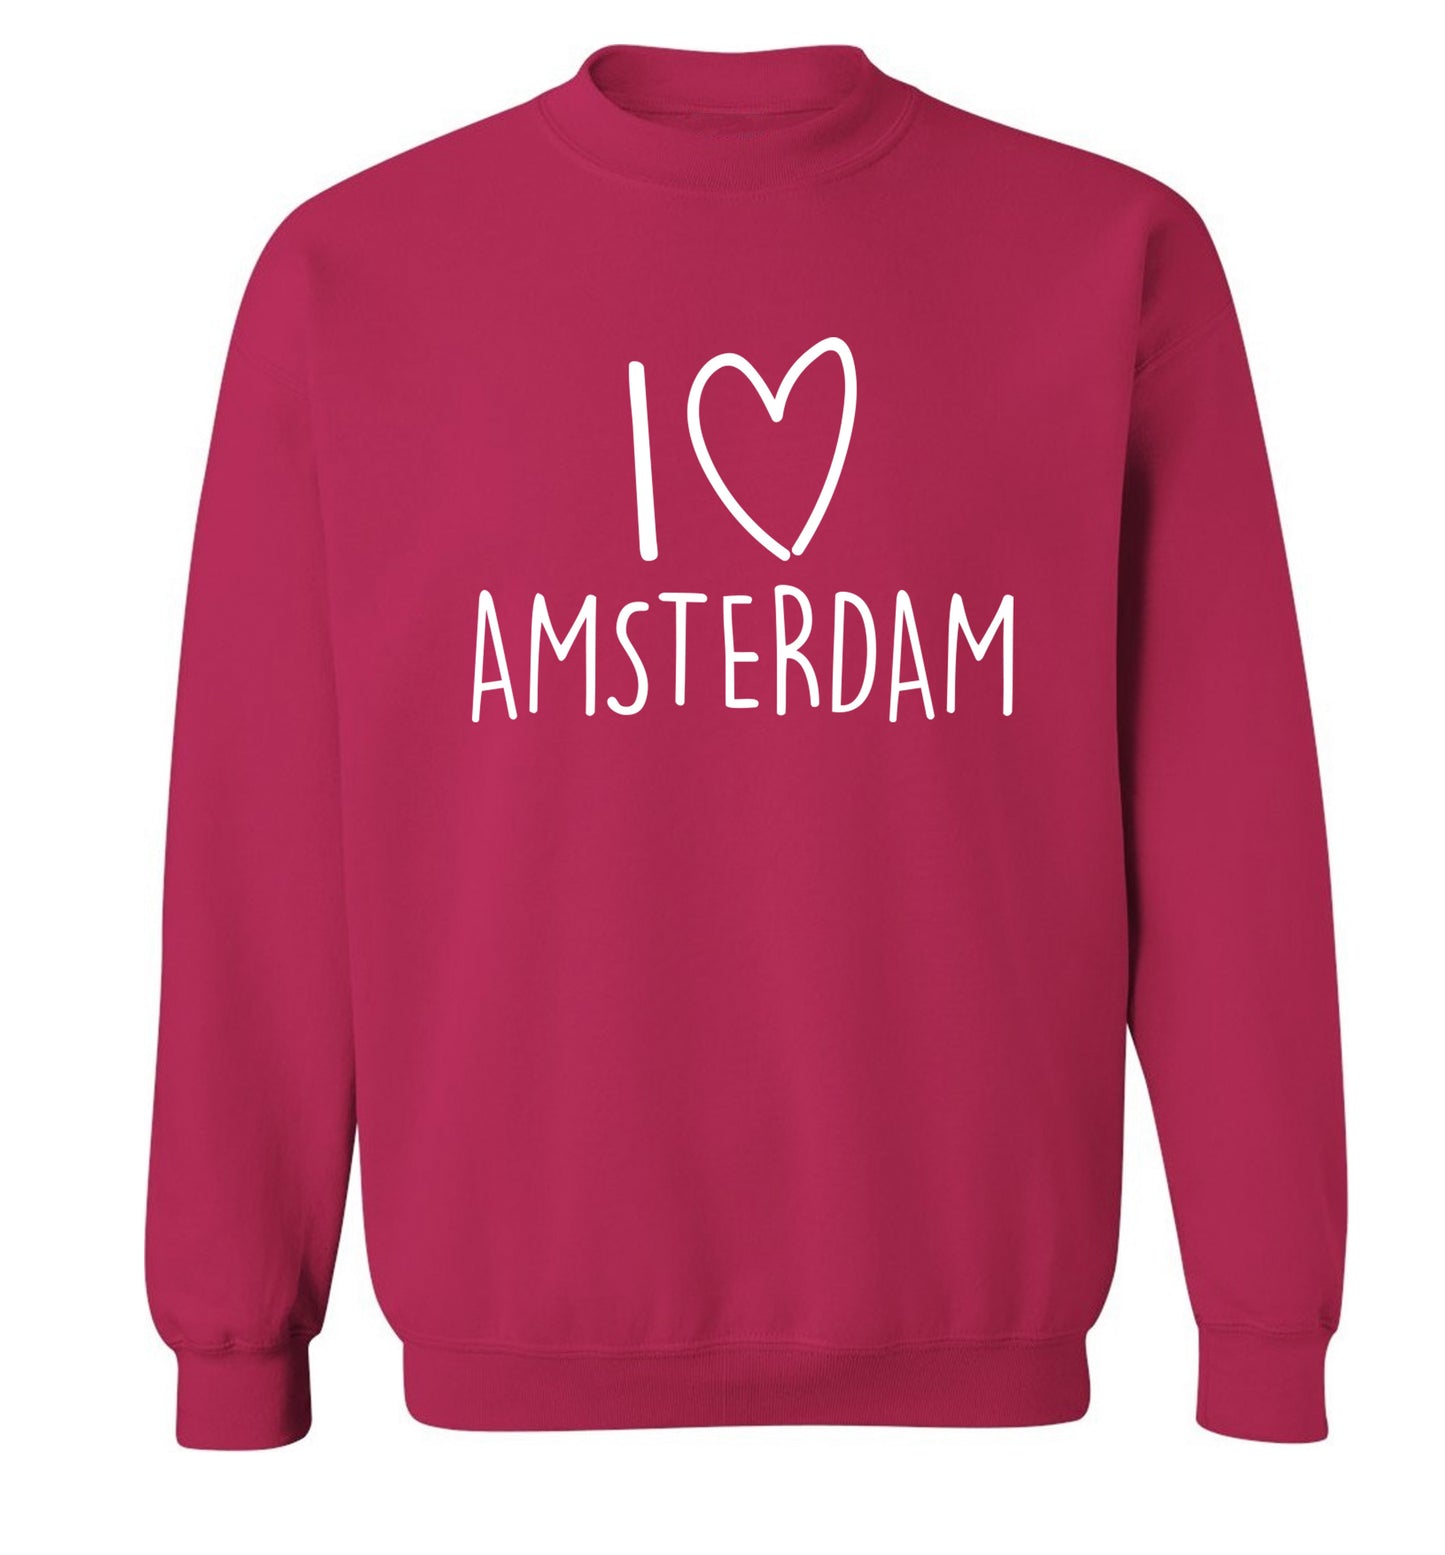 I love Amsterdam Adult's unisex pink Sweater 2XL